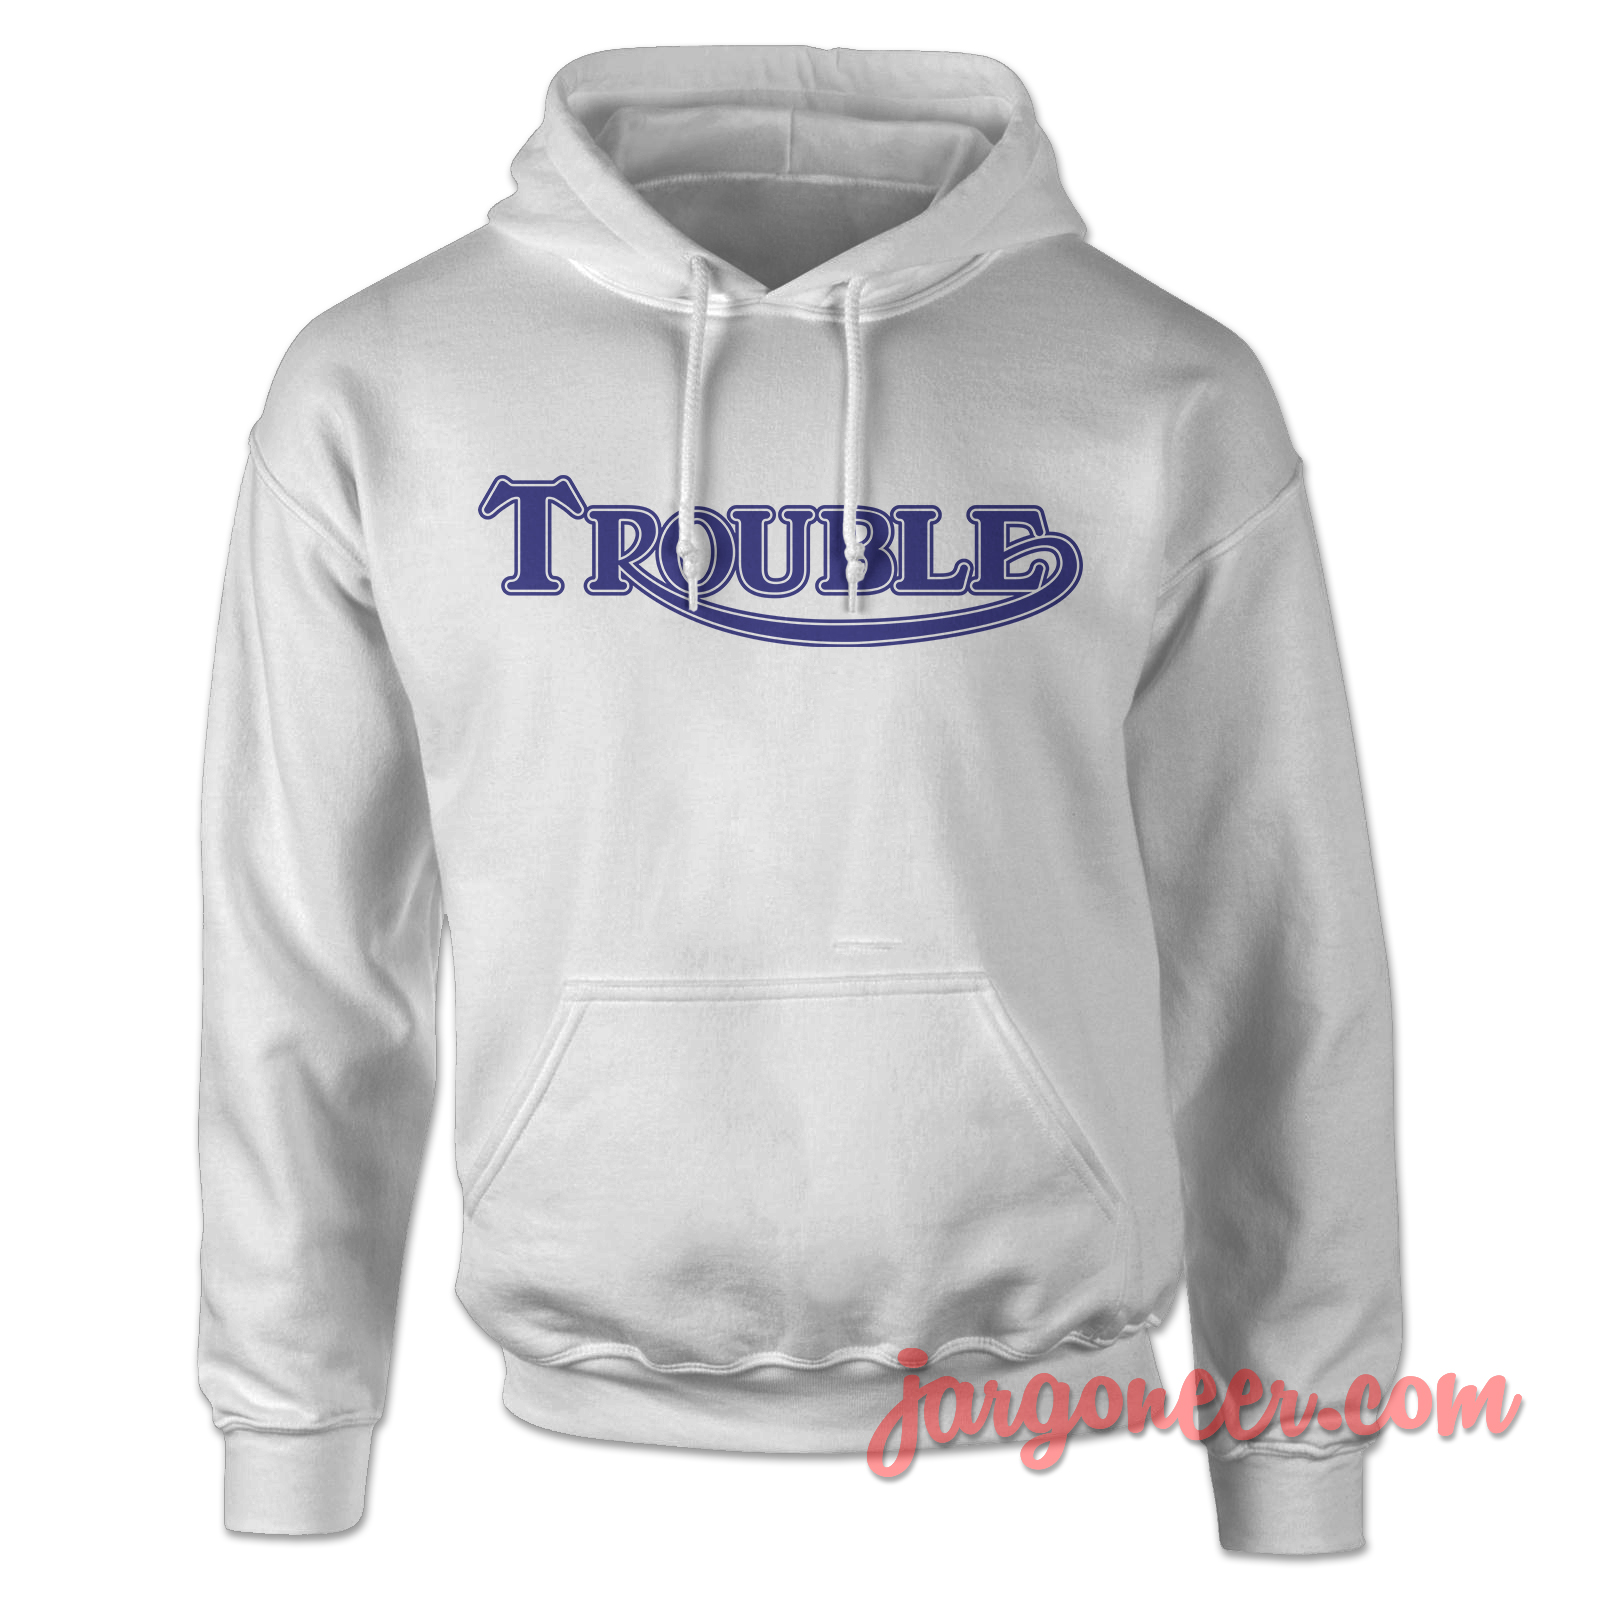 Trouble White Hoody - Shop Unique Graphic Cool Shirt Designs